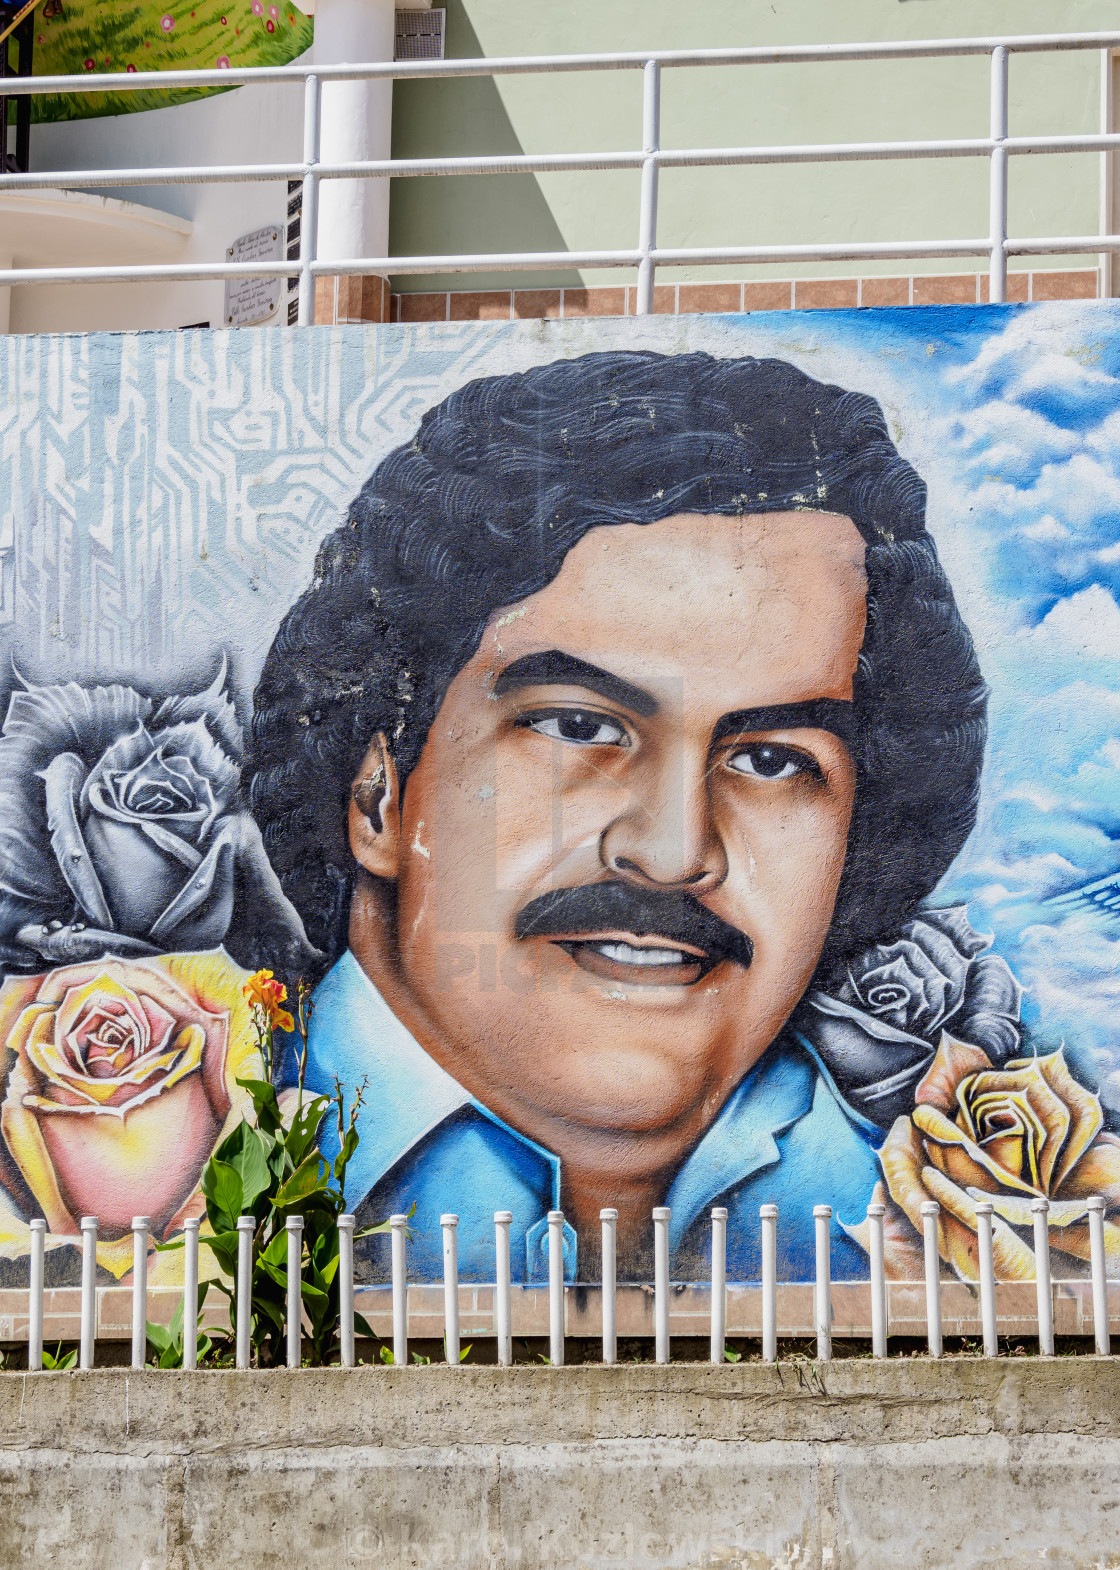 Mural Painting in El Barrio Pablo Escobar, Medellin, Antioquia  Department,... - License, download or print for £49.00 | Photos | Picfair